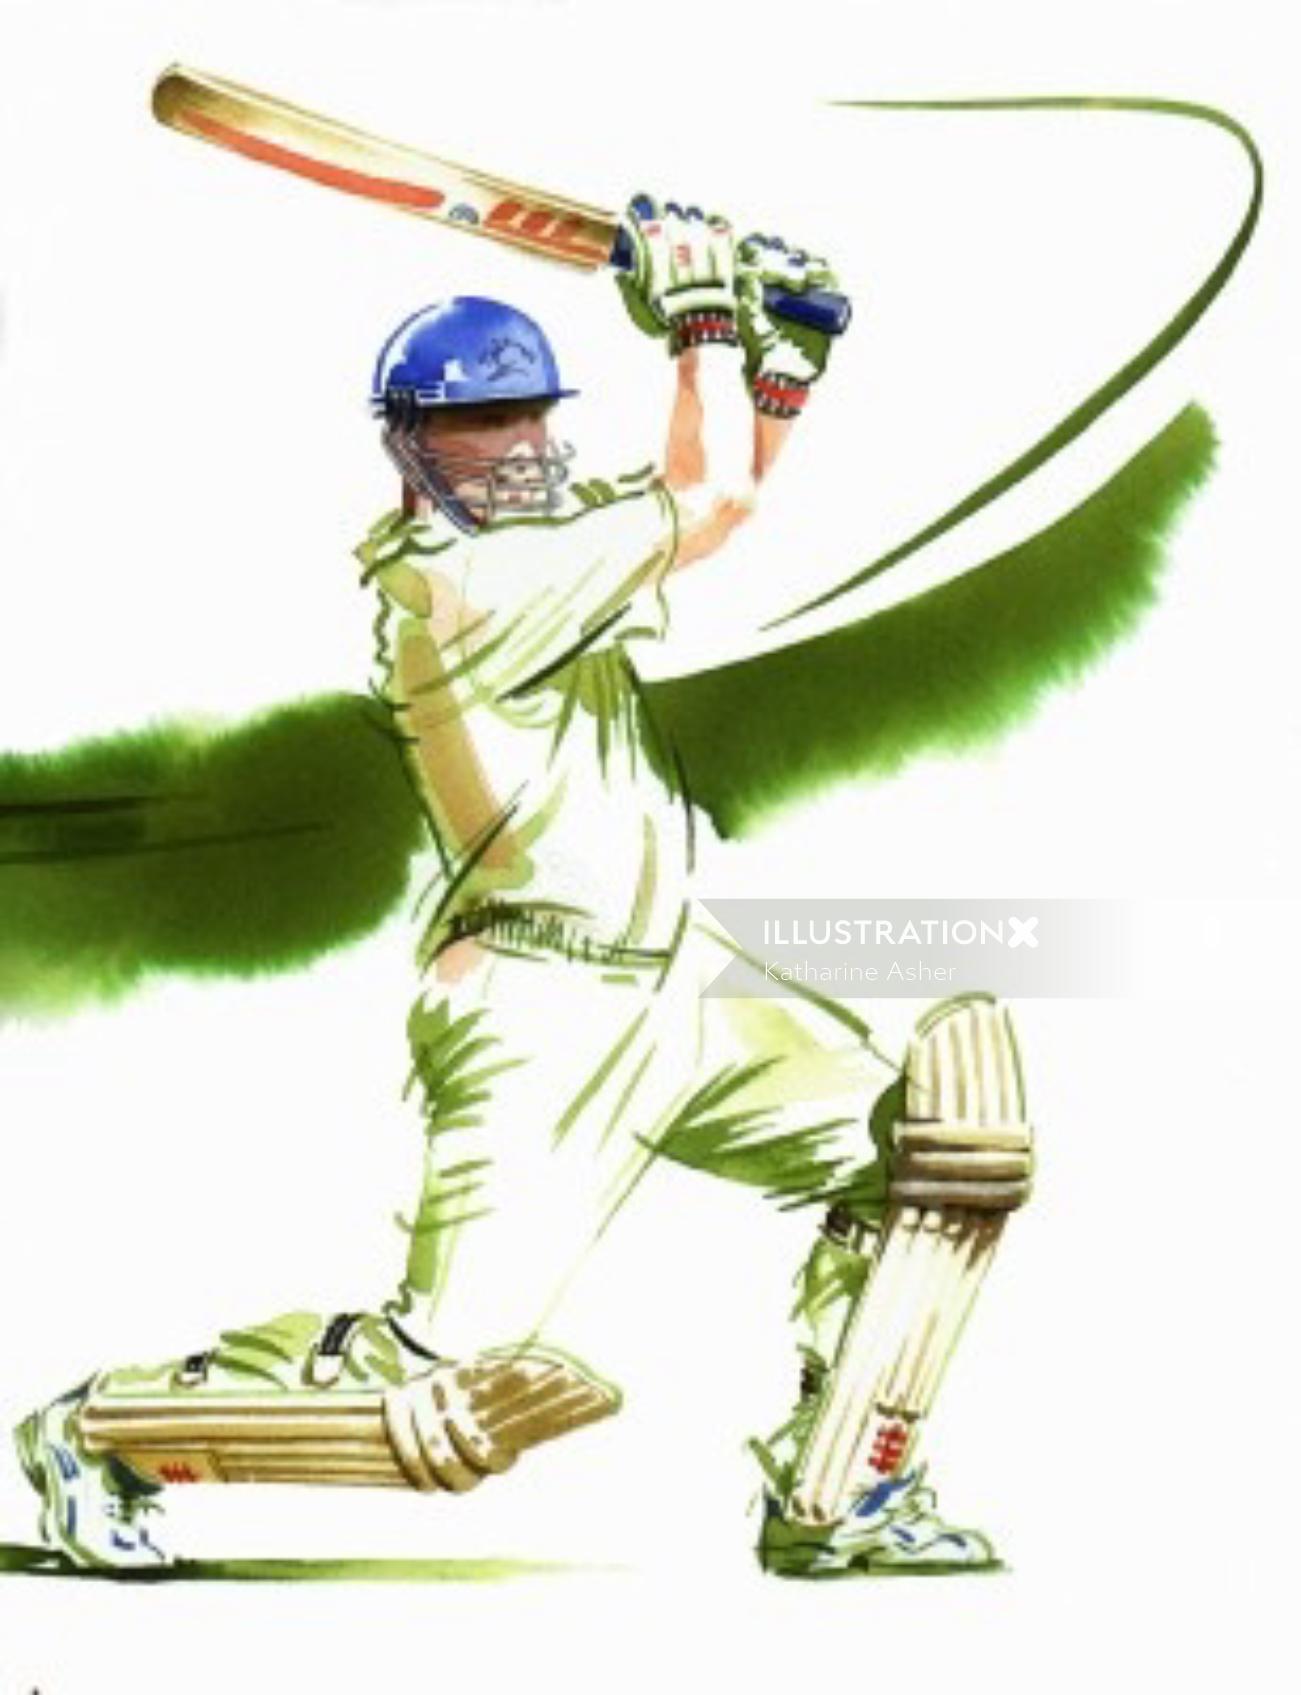 Cricket illustration by Katharine Asher